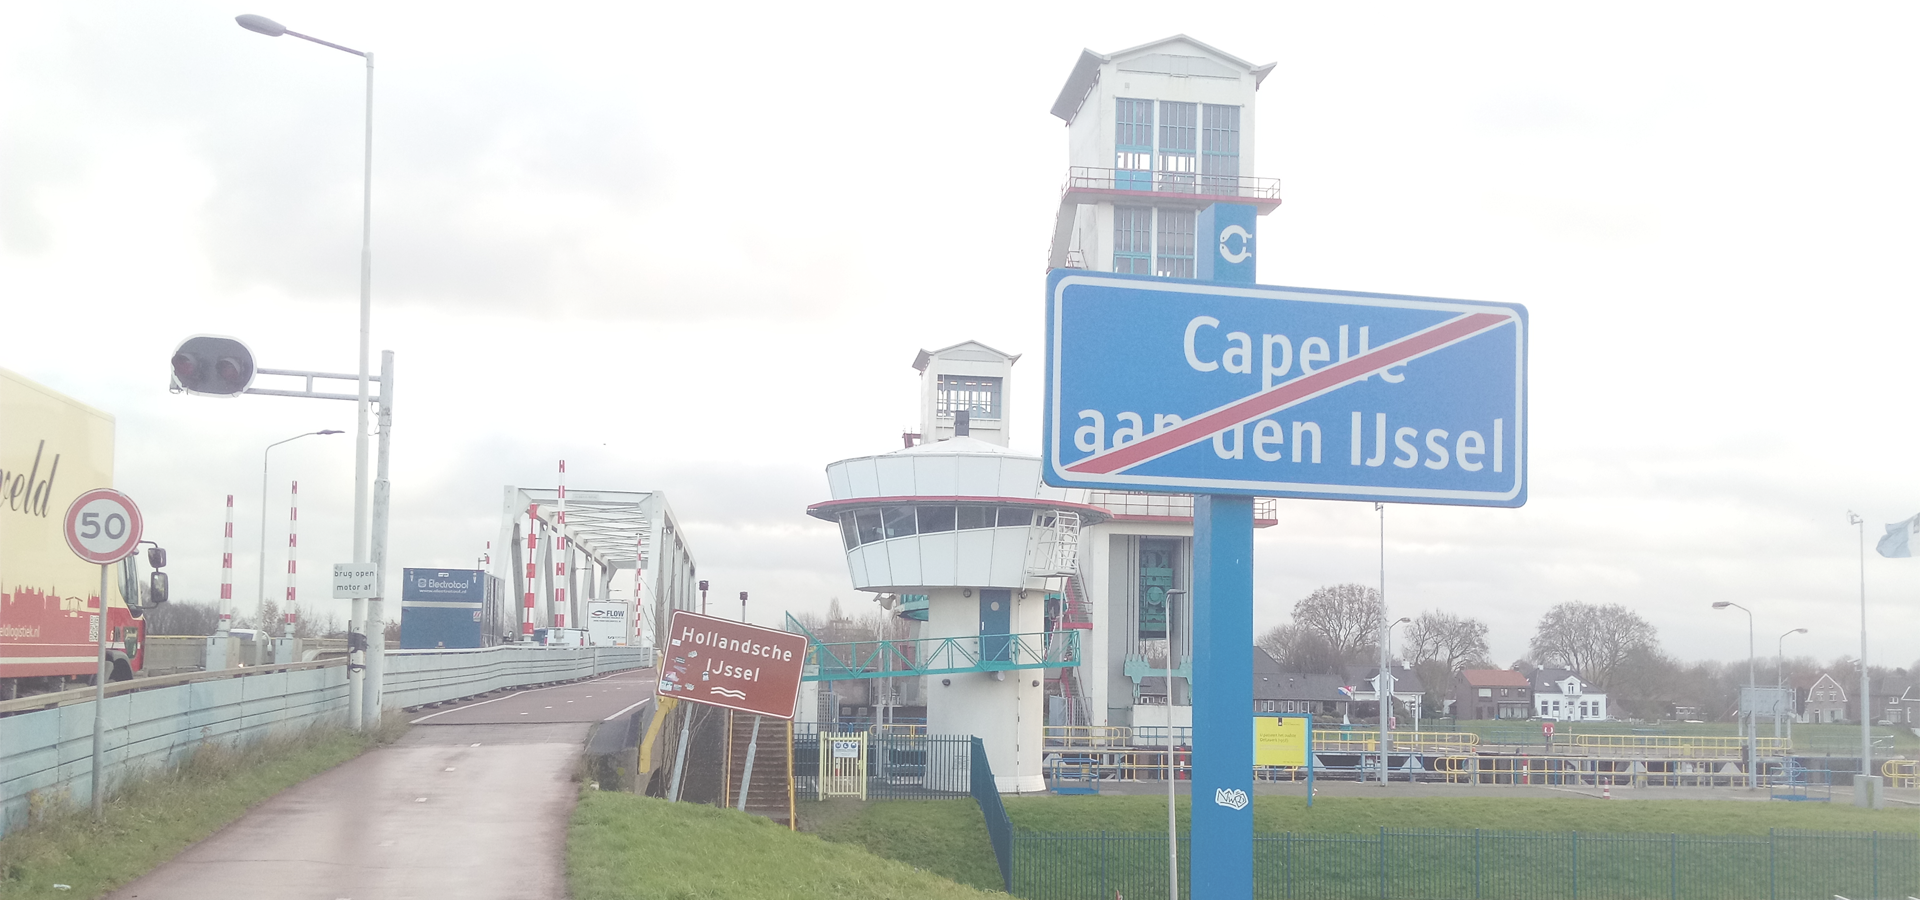 <b>Capelle aan den IJssel, South Holland, Netherlands</b>